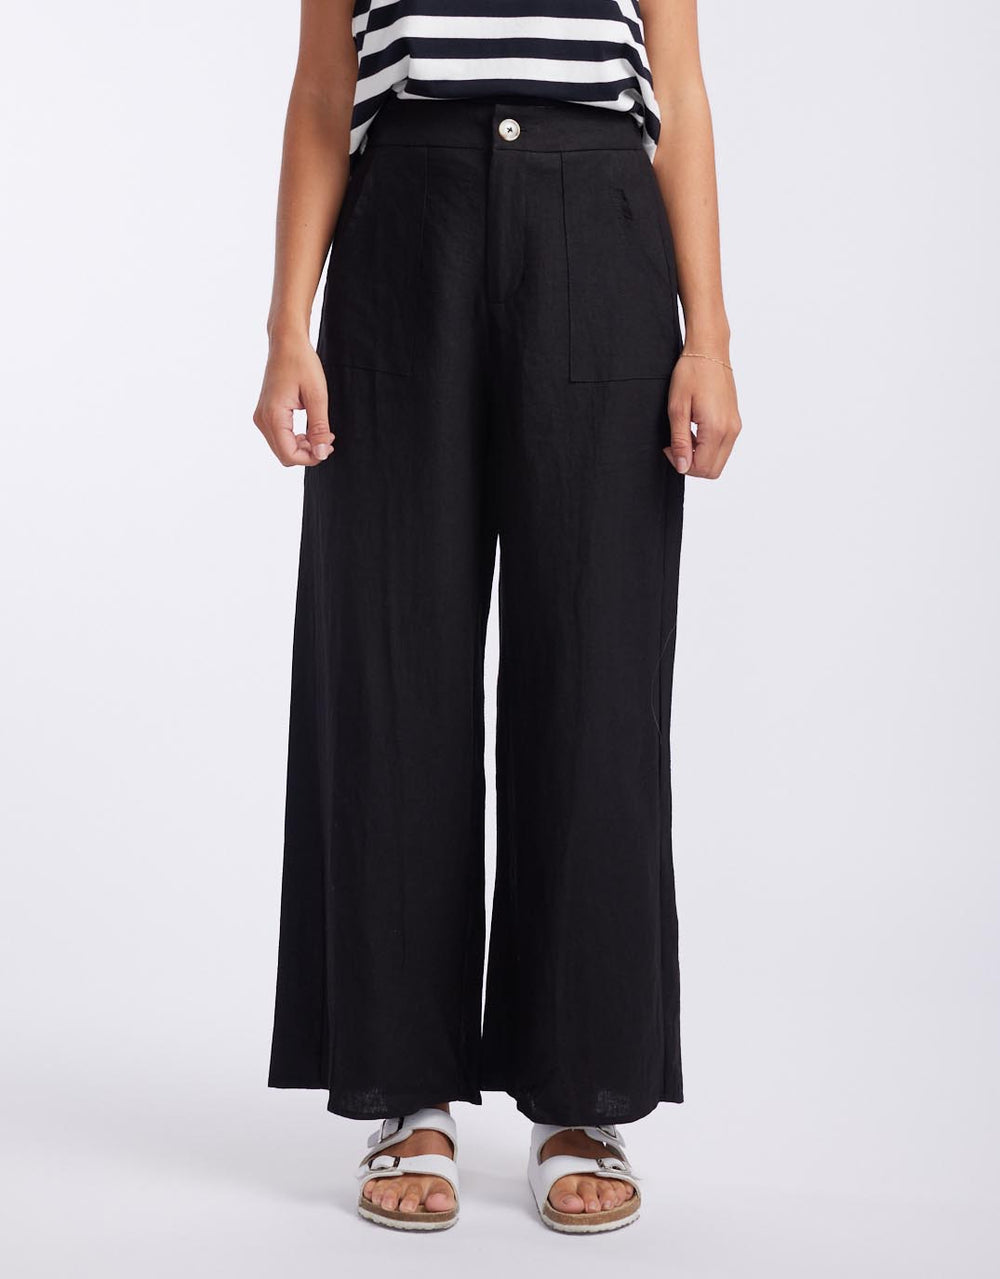 Buy Linen Pants for Women Online Australia